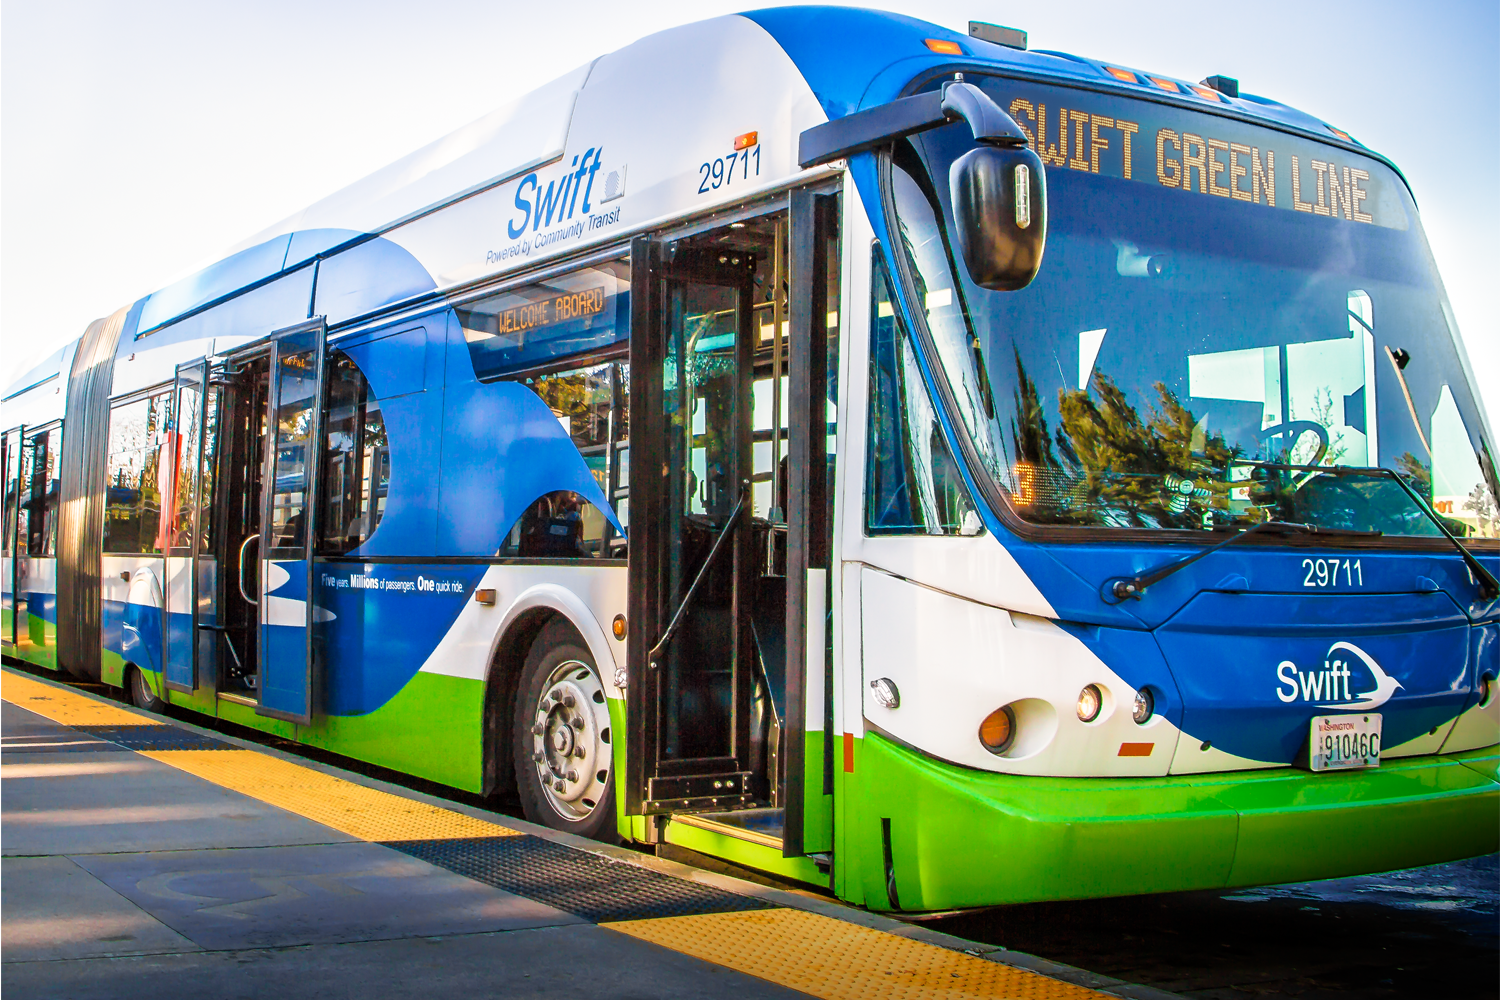 A Community Transit bus serves the Swift Green Line.